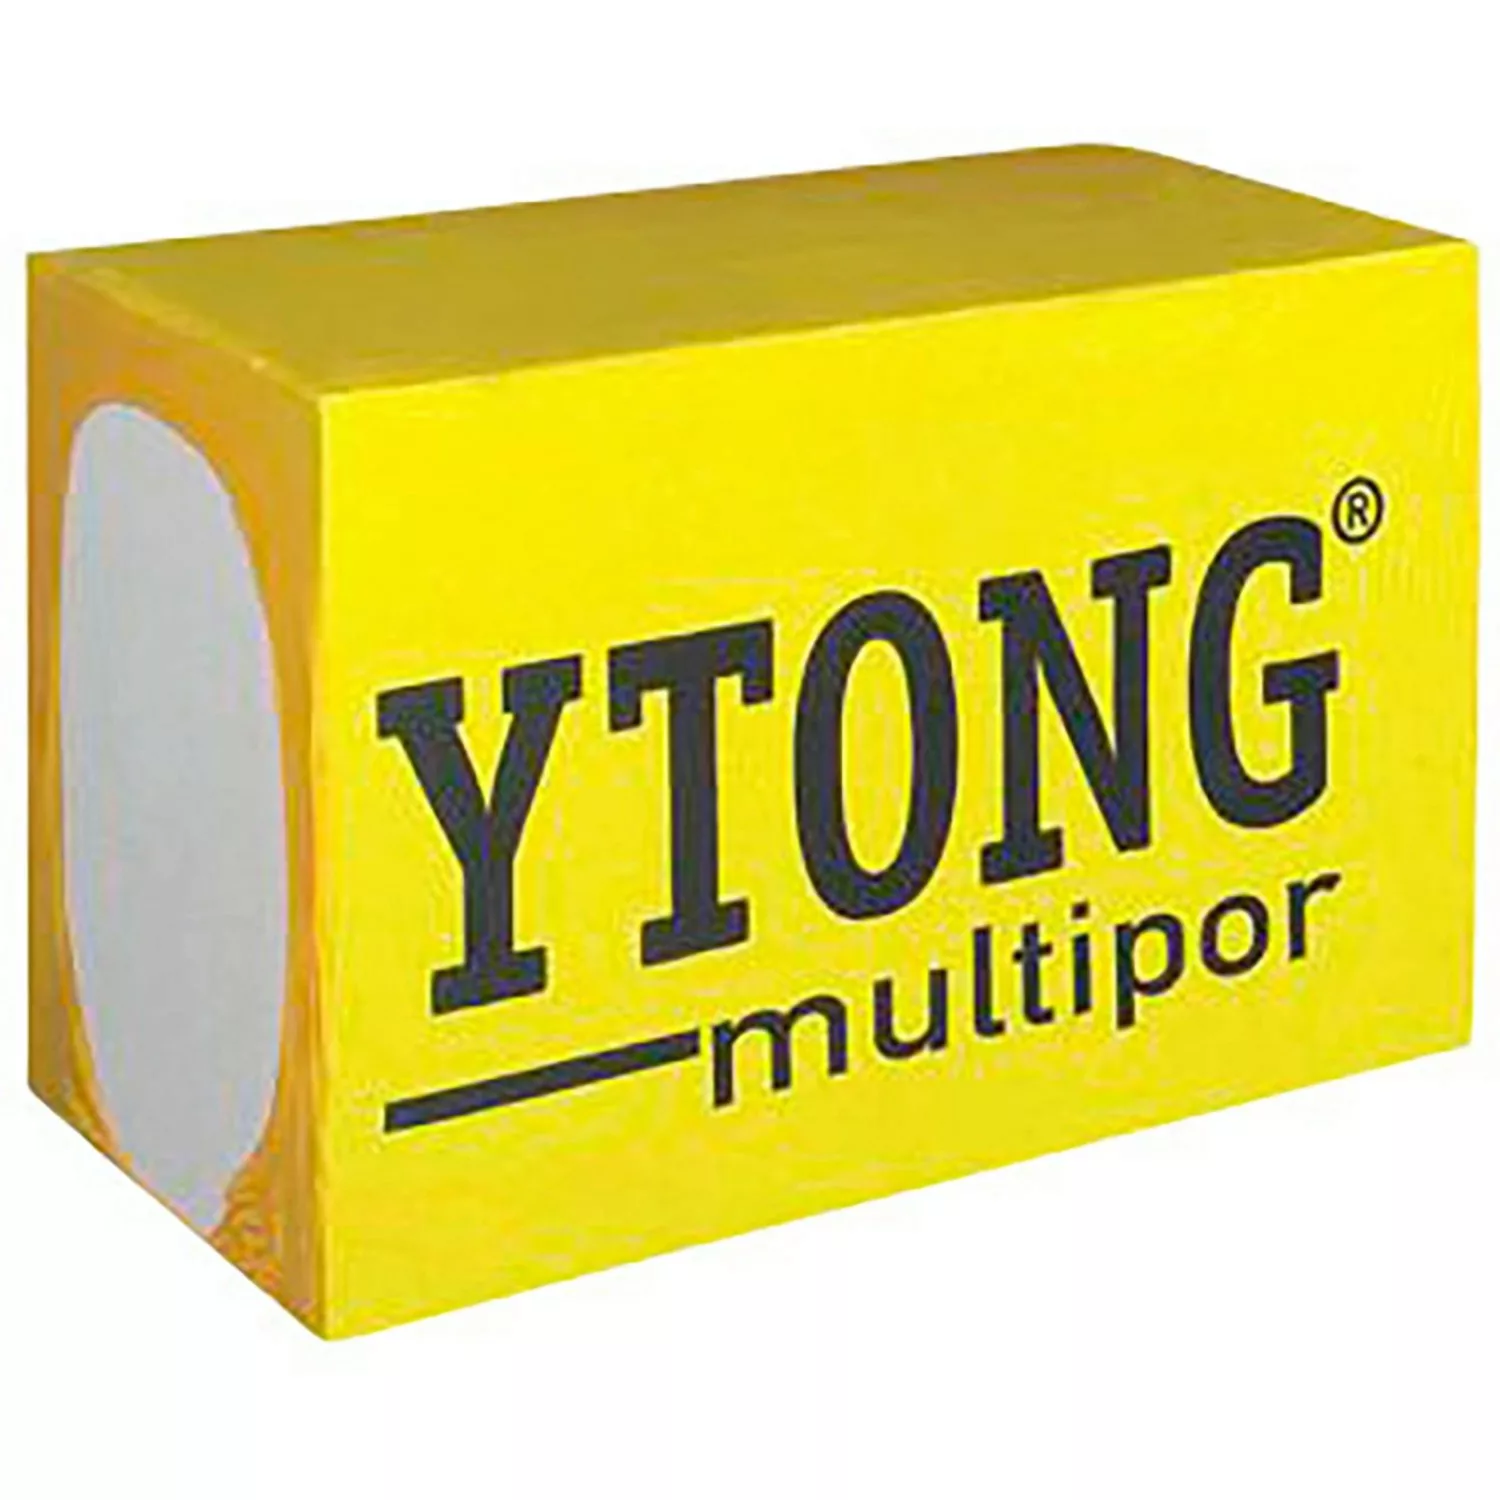 Ytong® Multipor Mineraldämmplatte 80 mm 1,17 m² 5 Stk./Paket günstig online kaufen